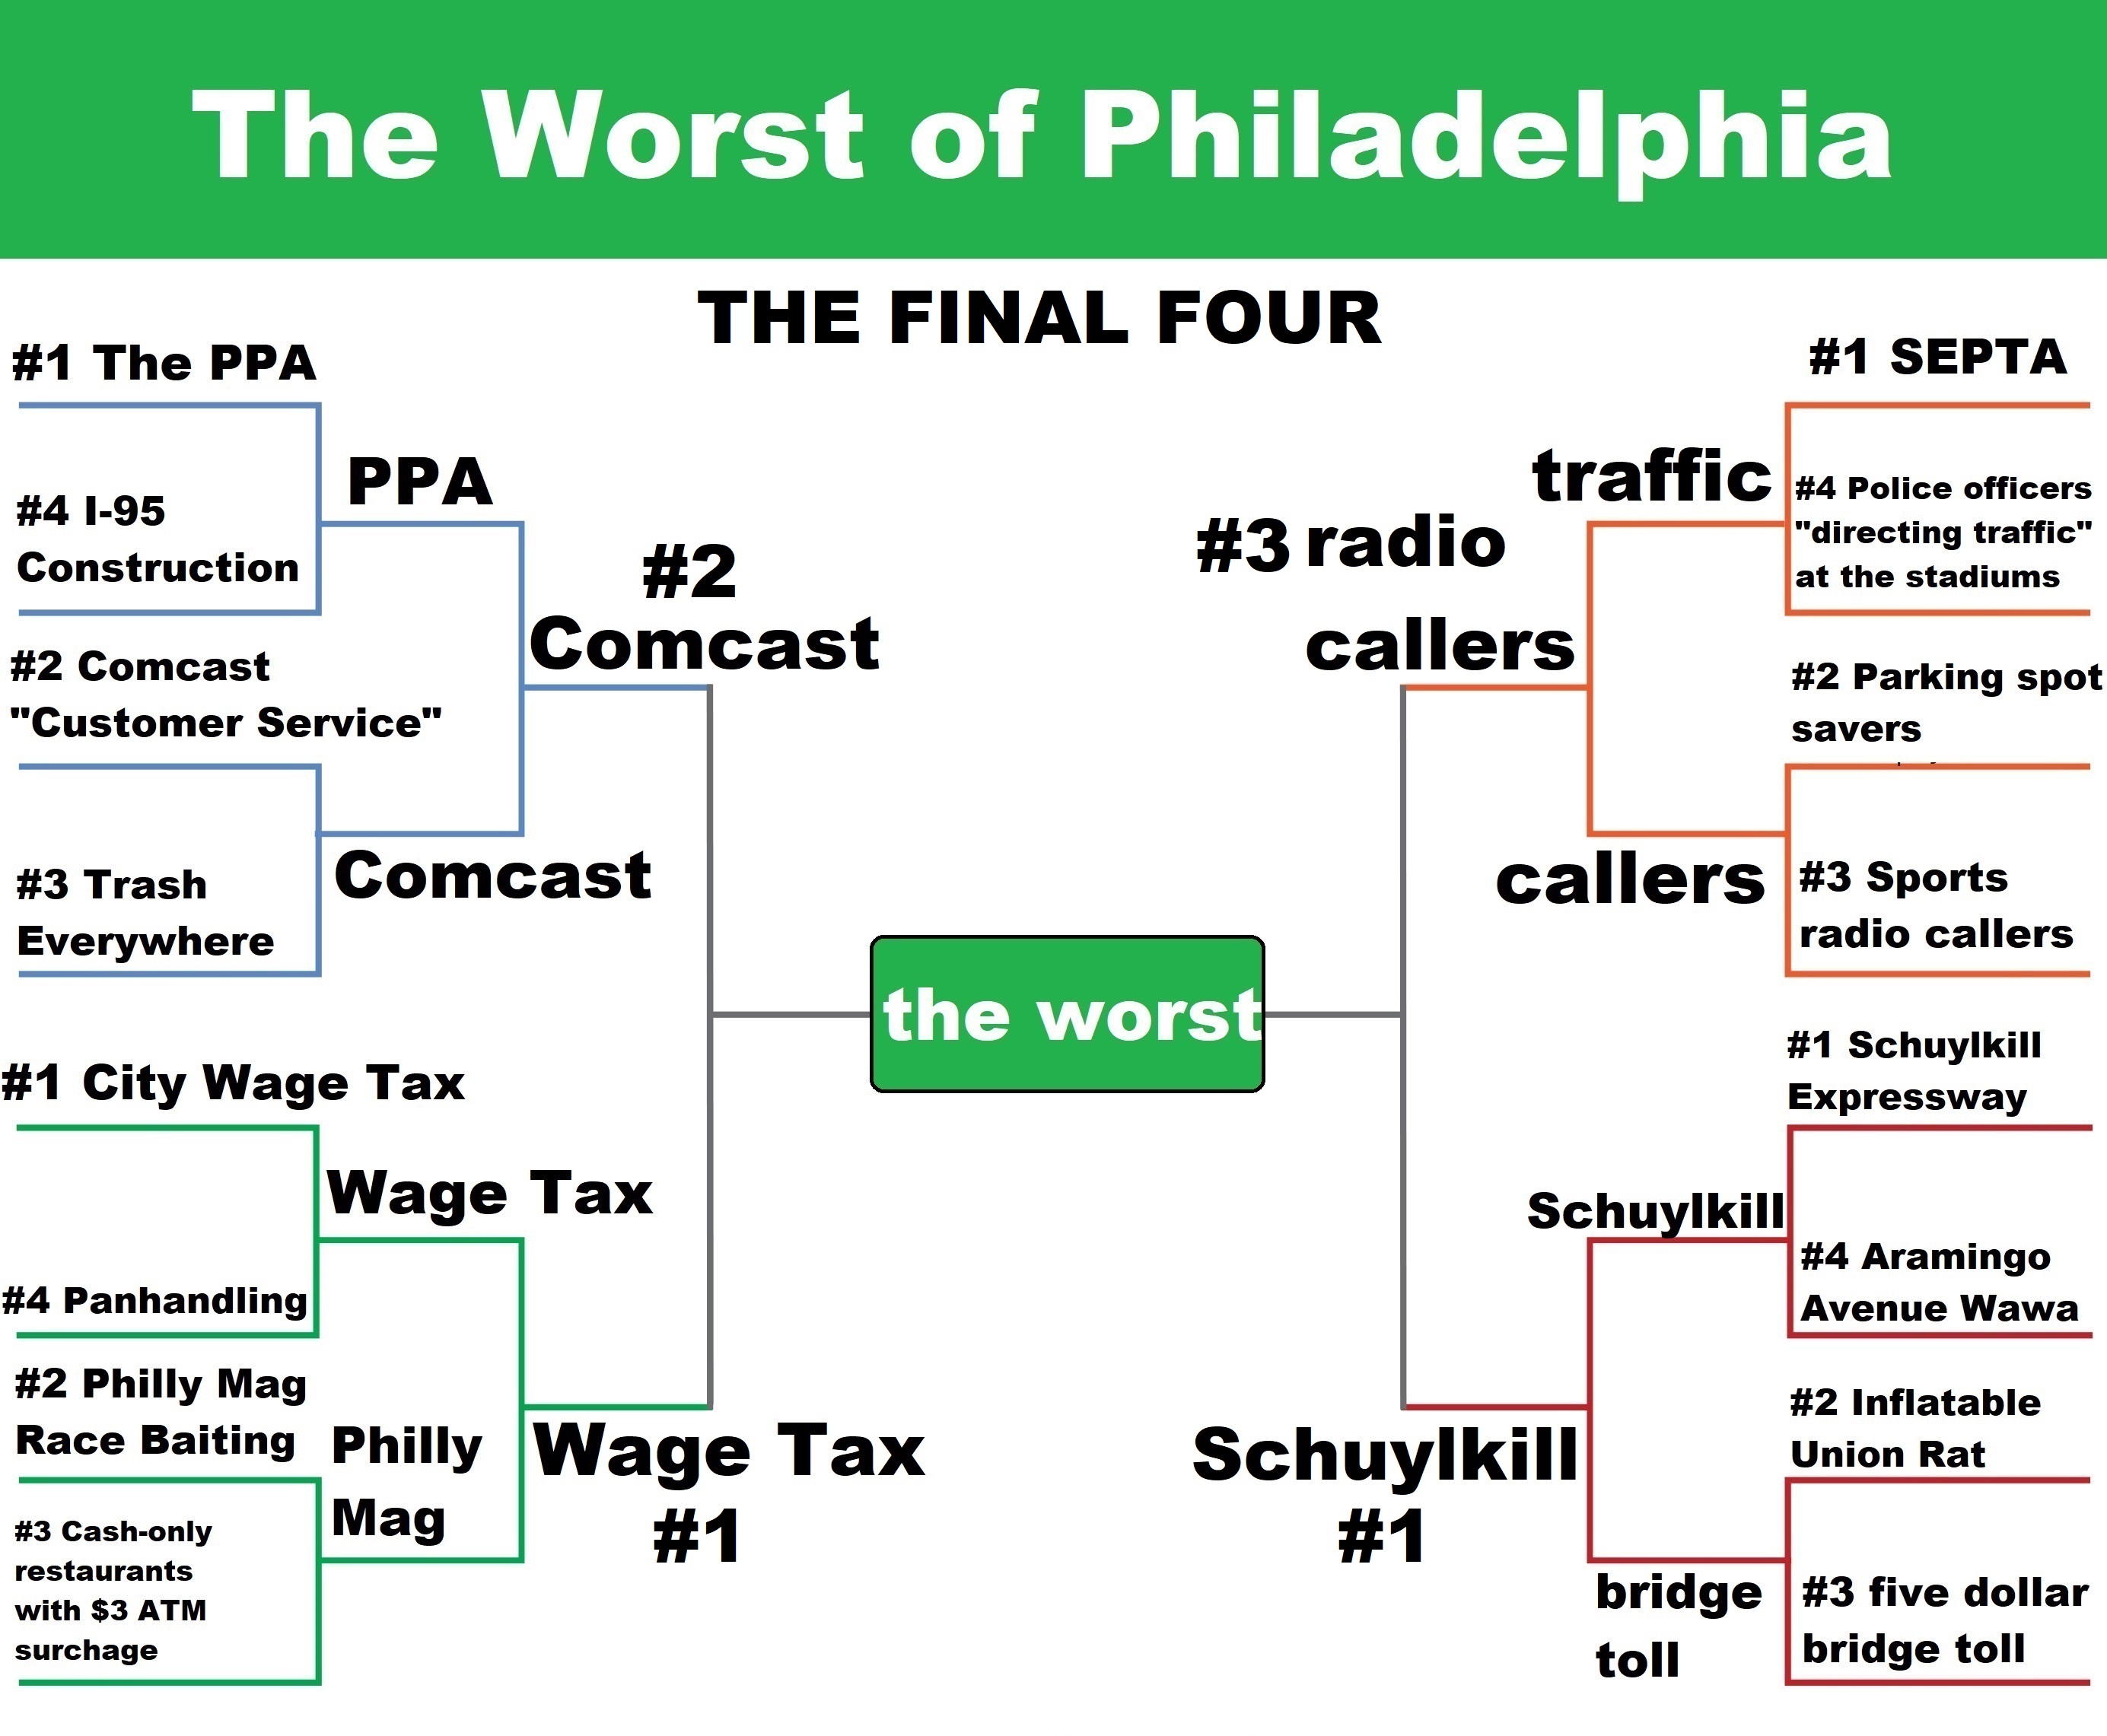 The Worst of Philadelphia: Final Four